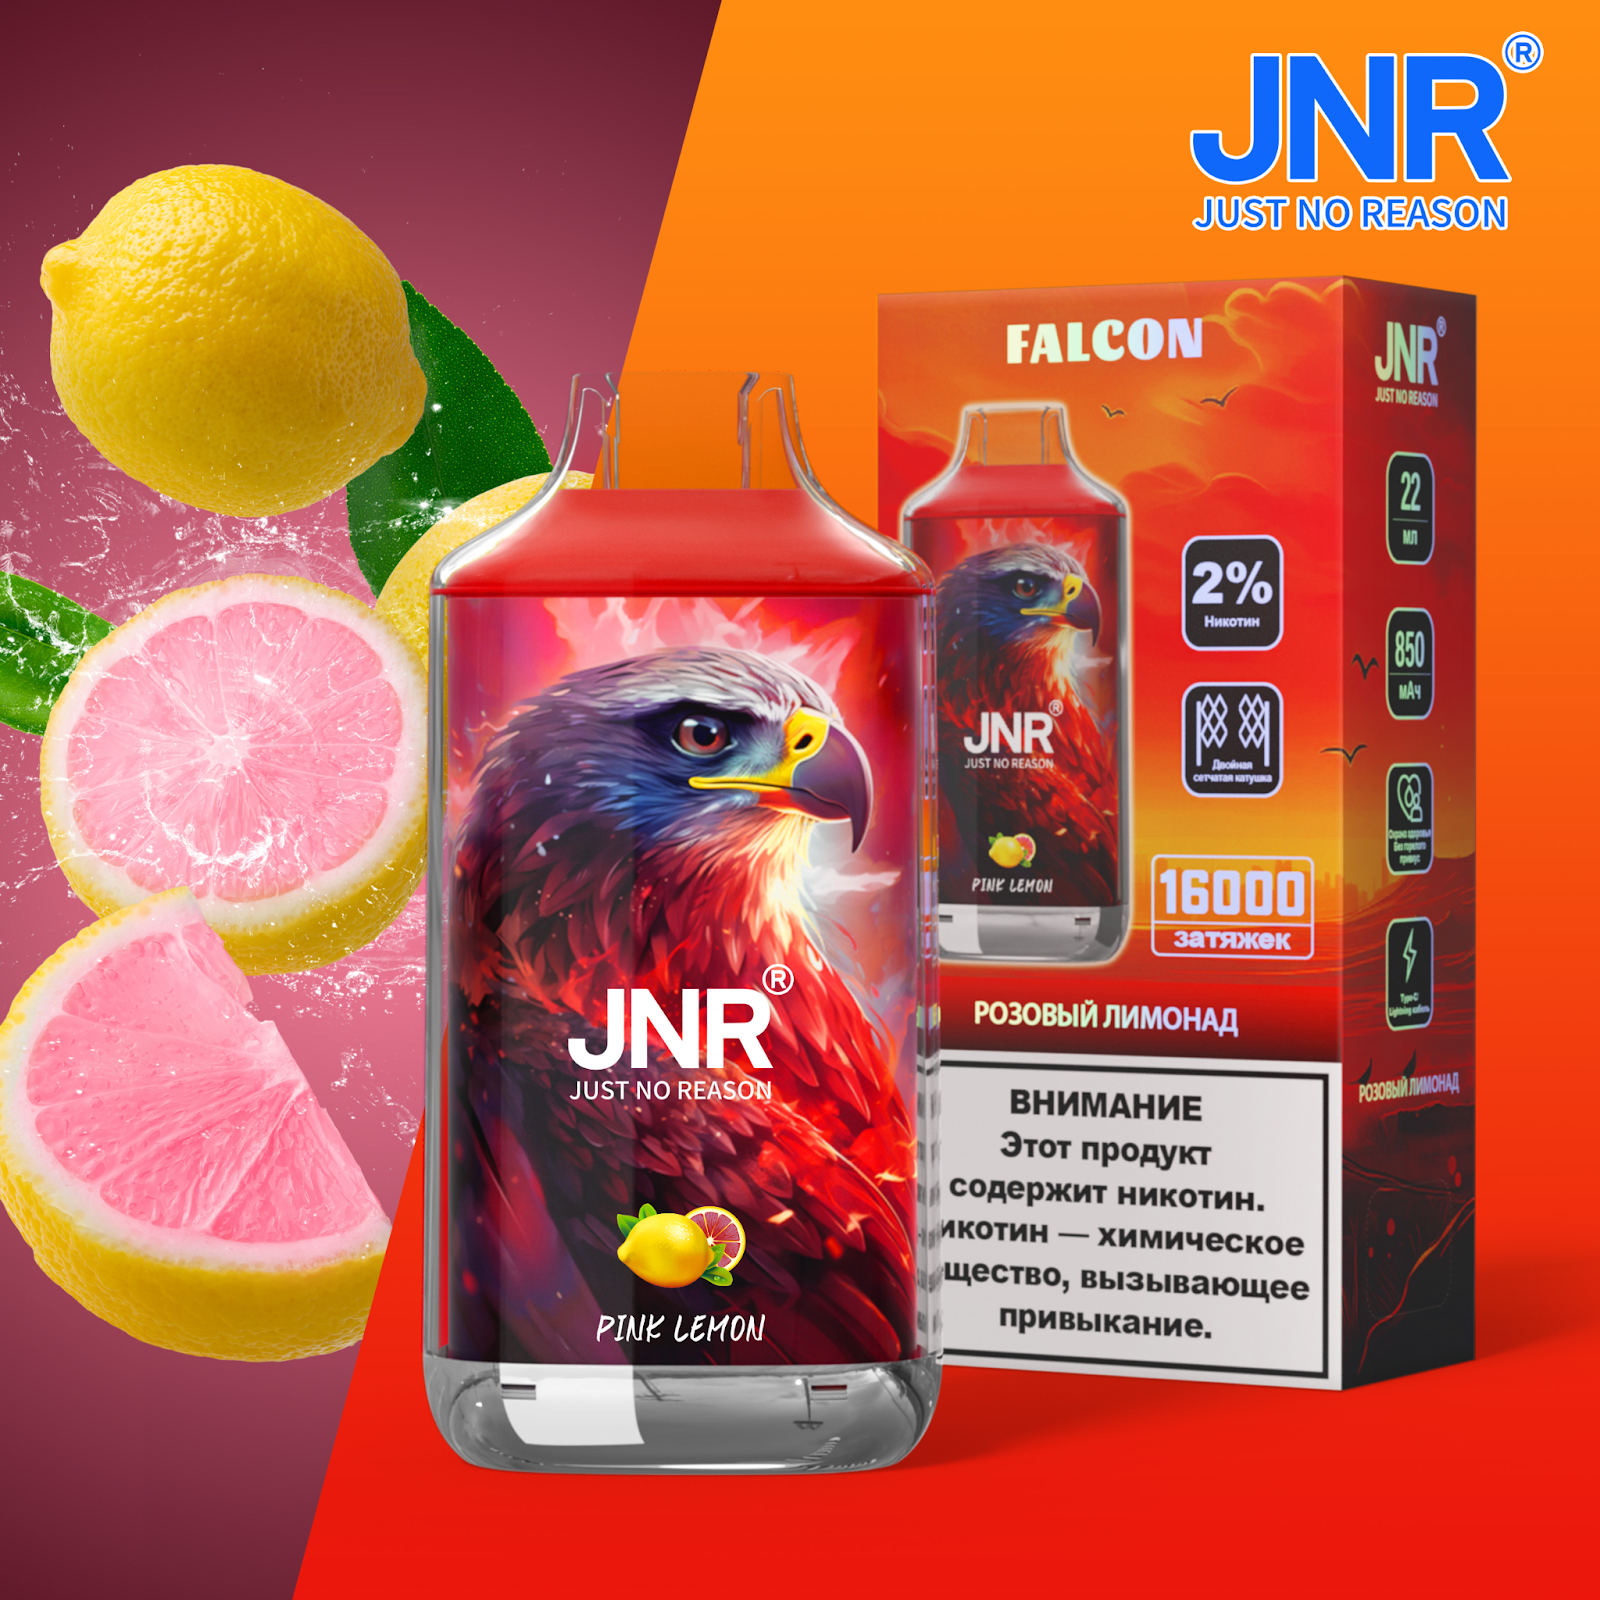 JNR falcon X-18000